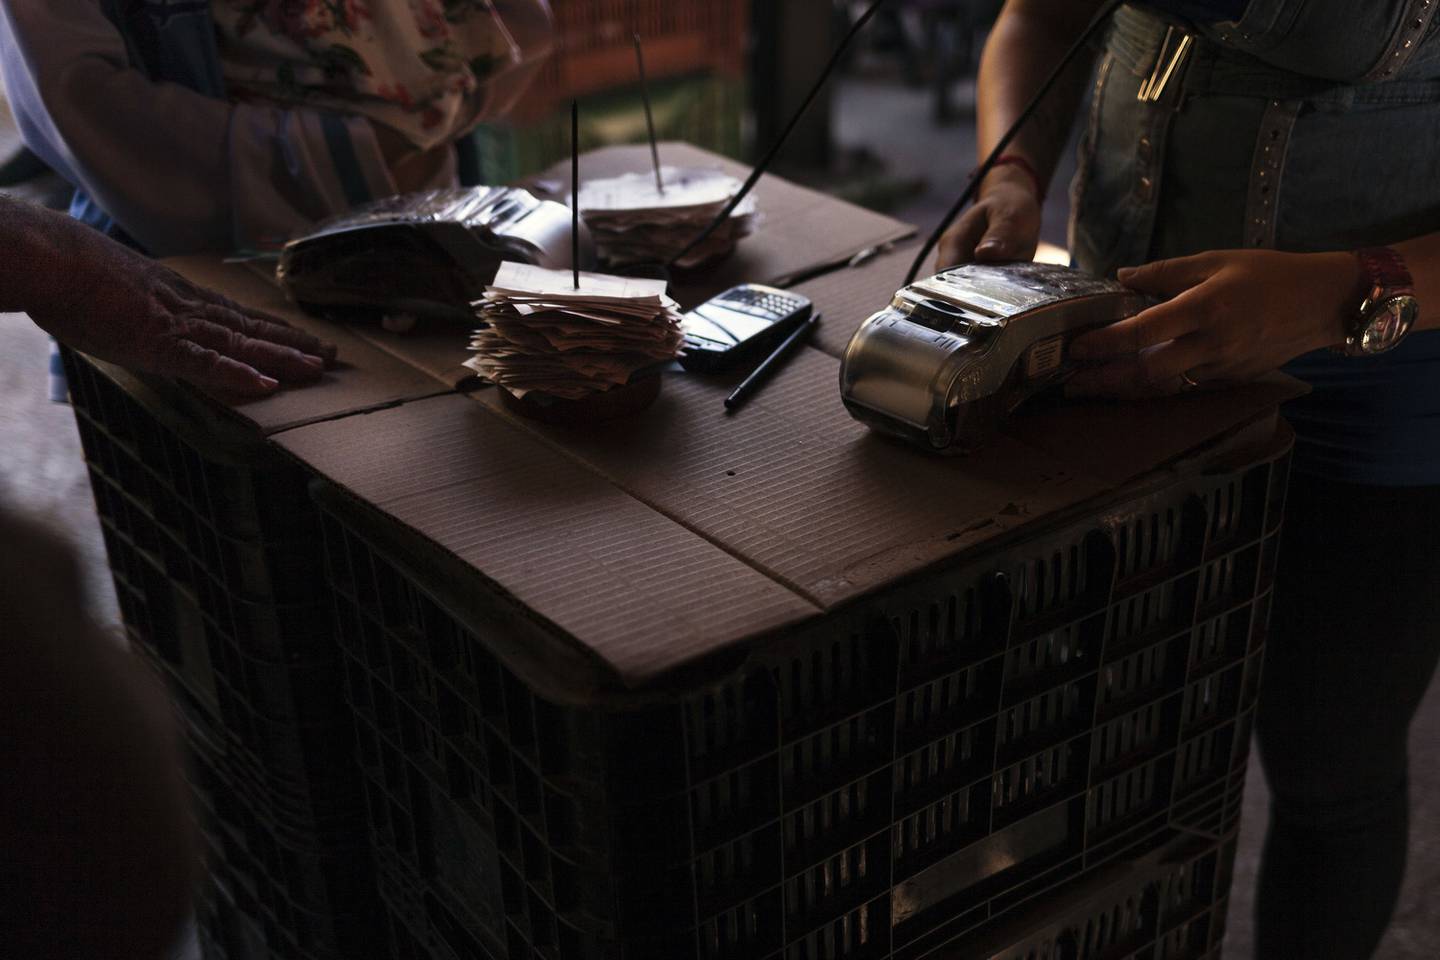 A vendor operates a credit card machine at a street market in the La Urbina neighborhood of Caracas, Venezuela